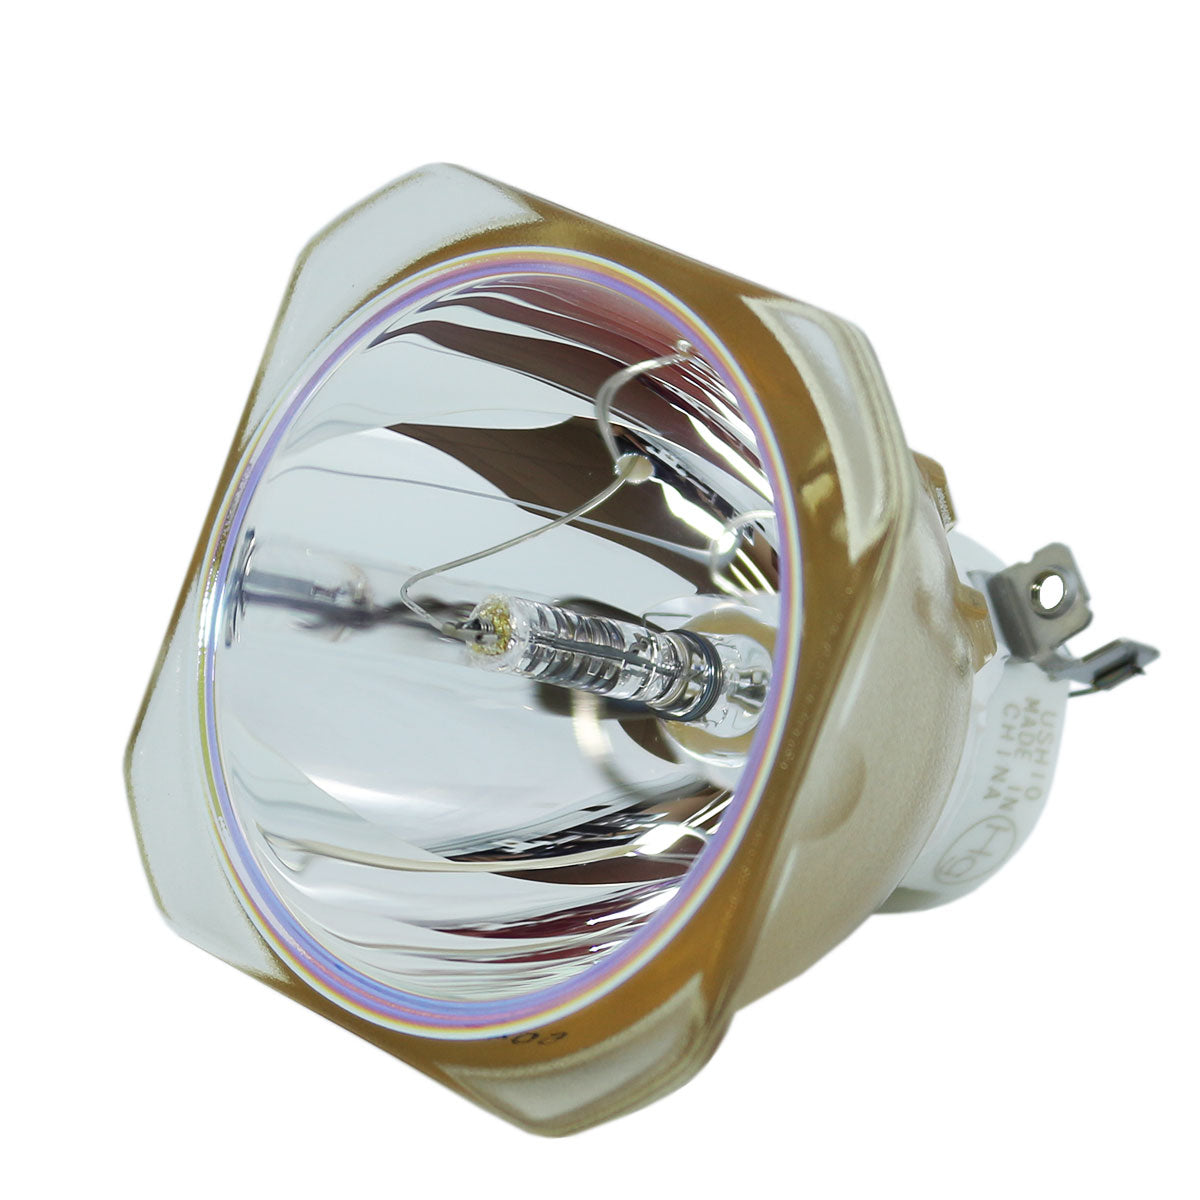 RICOH 512893 Ushio Projector Bare Lamp